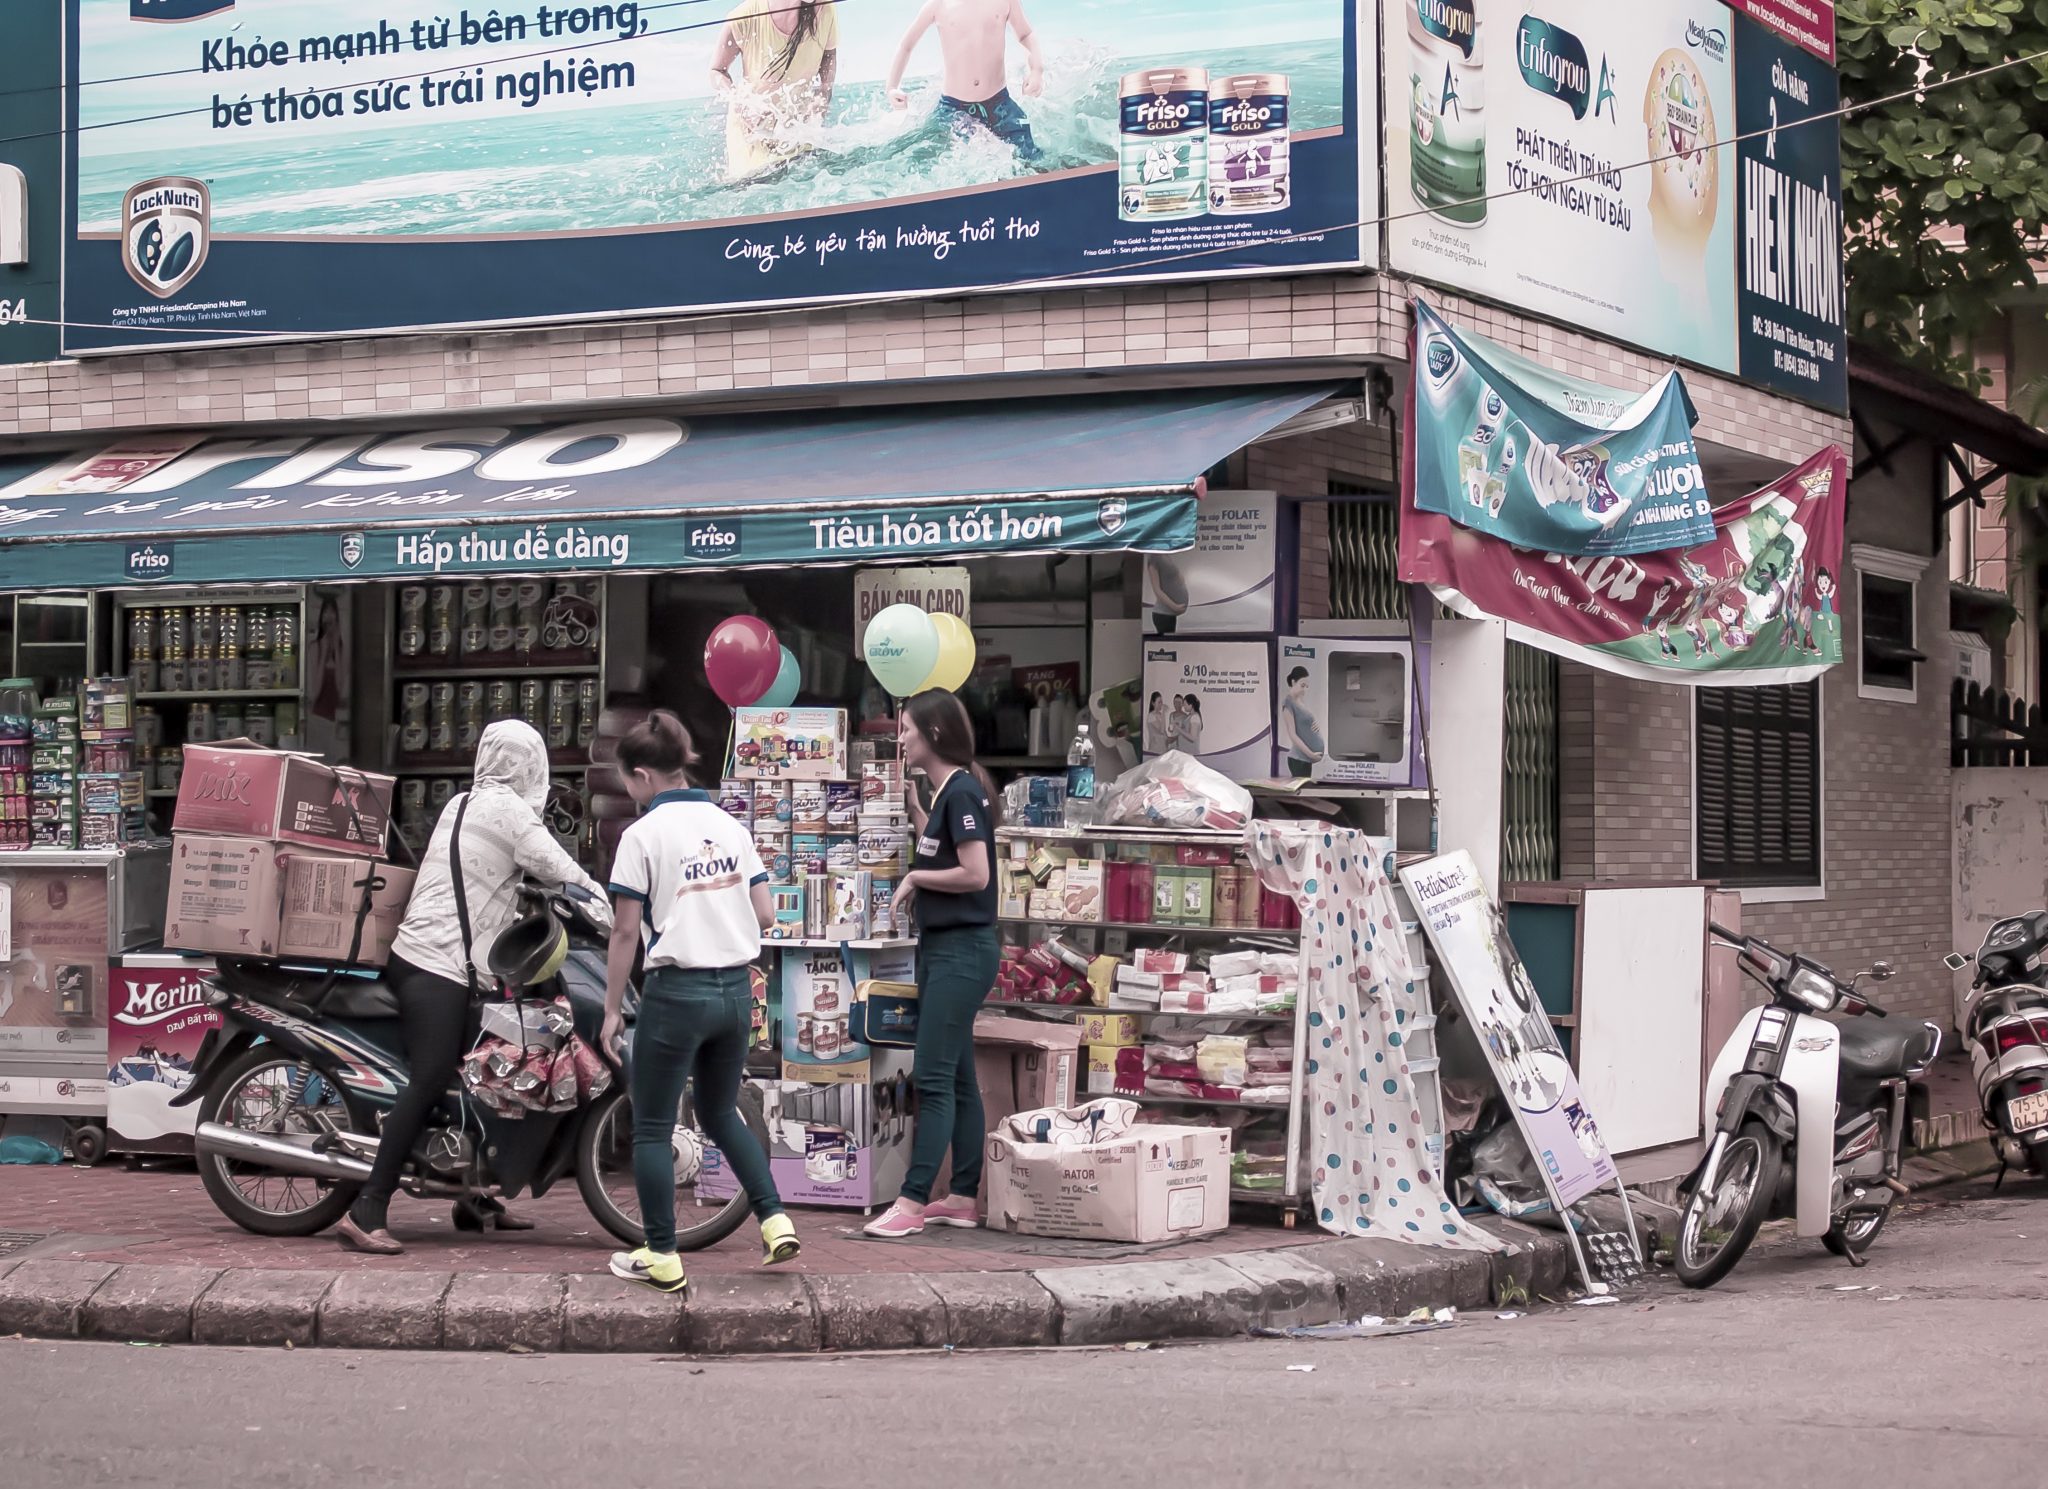 How to understand an American teacher near Nguyễn Văn Trỗi Street in Ho Chi Minh City, Vietnam